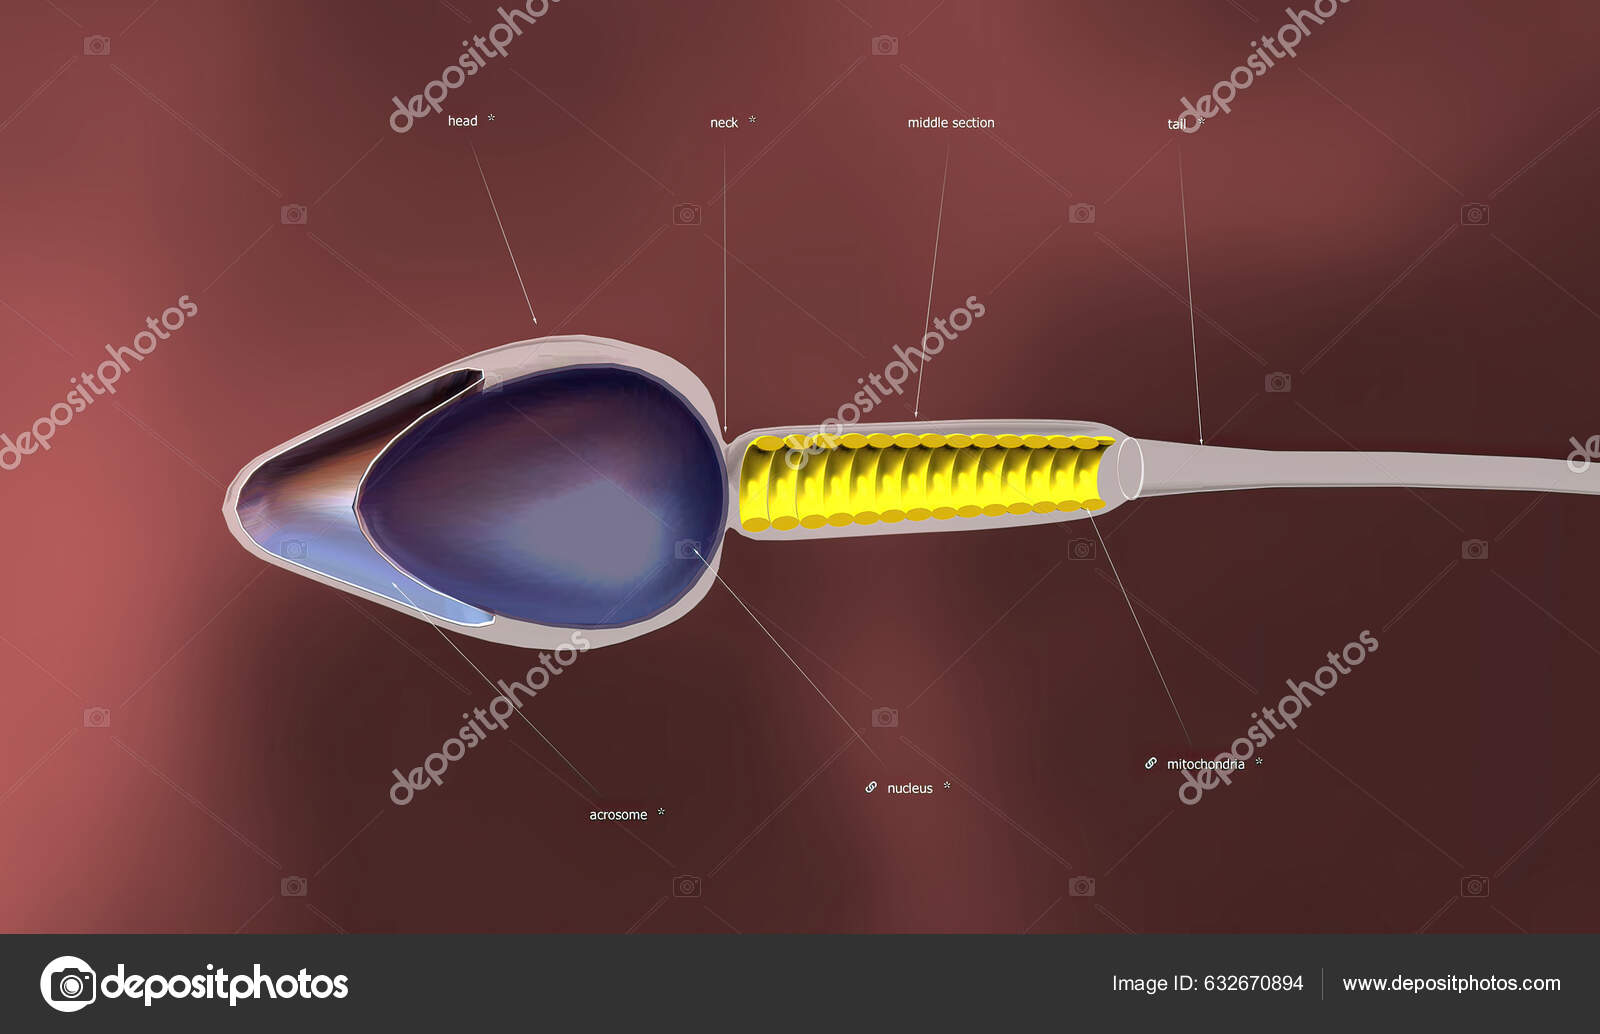 Sperm cell stok fotoğraflar | Sperm cell telifsiz resimler, görseller |  Depositphotos